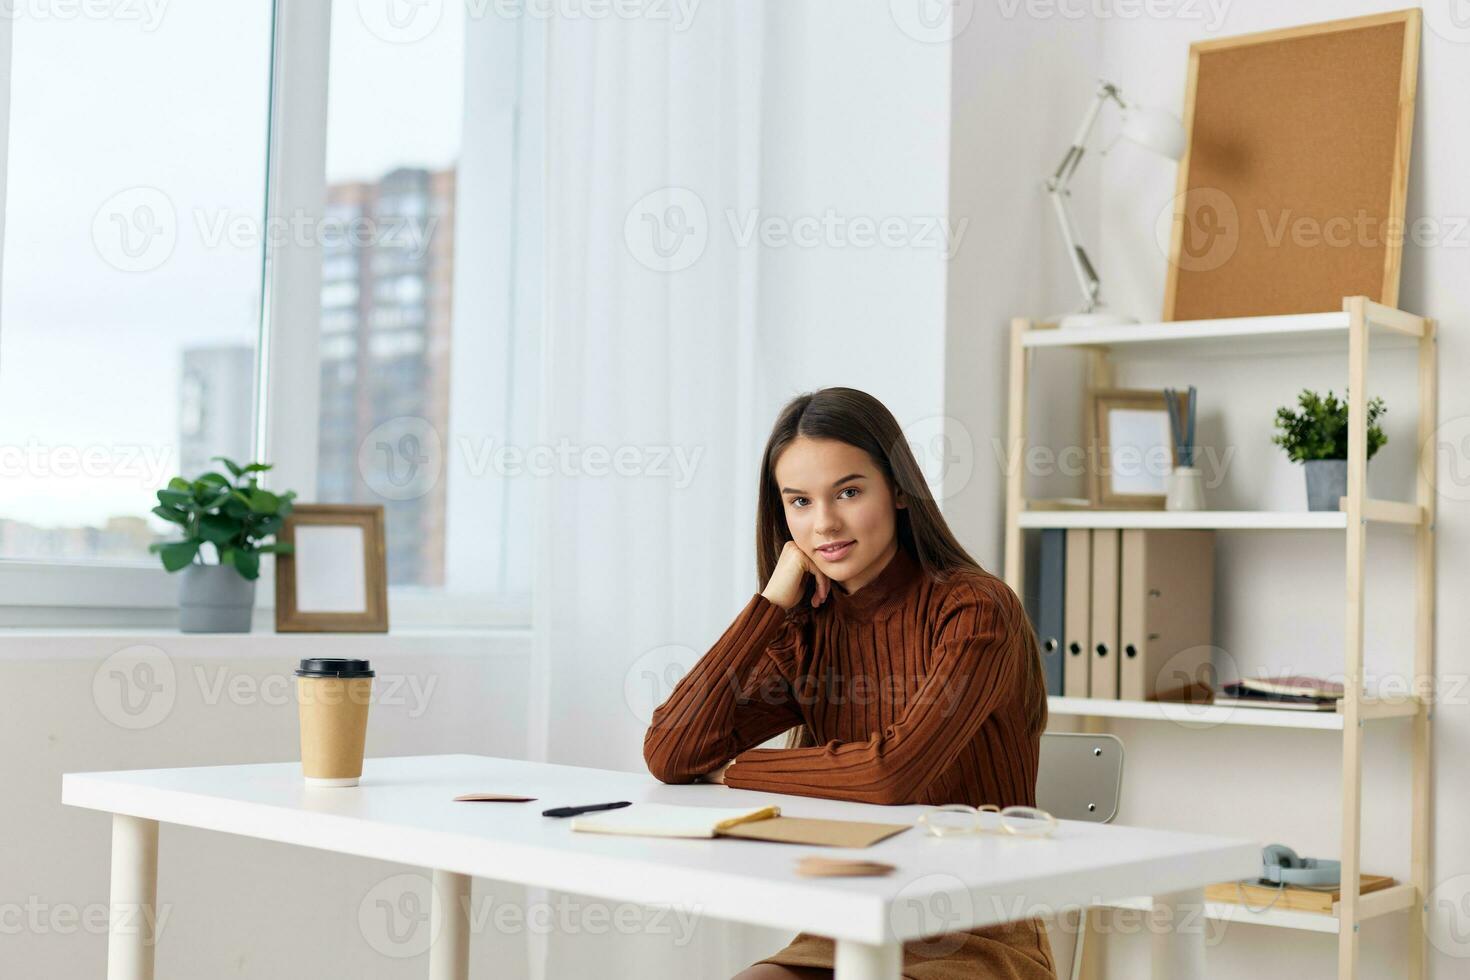 student desk table preparation schoolgirl girl exam teenager notebook education photo